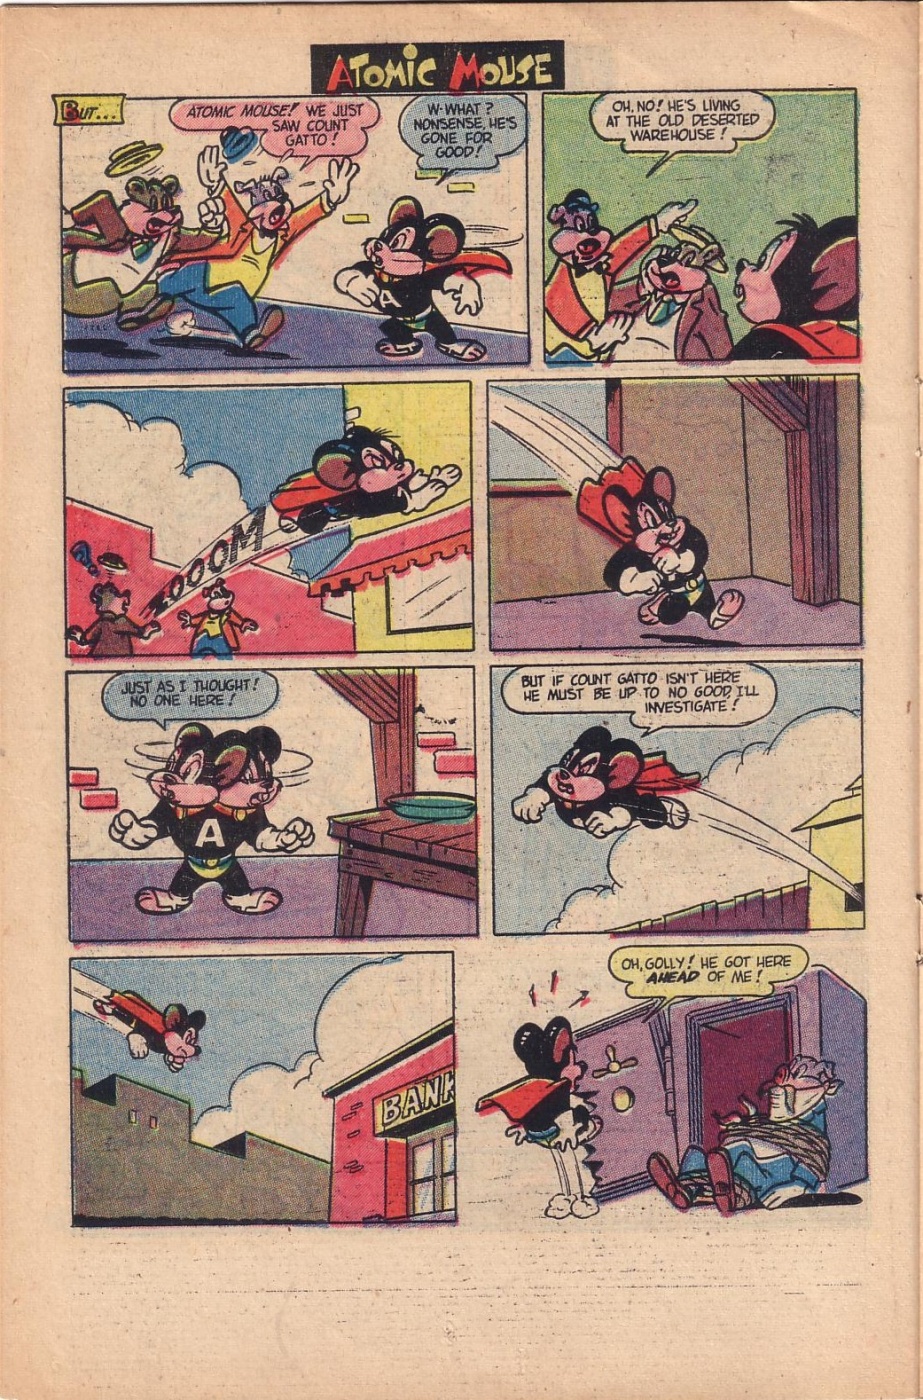 Atomic Mouse Comics - Funny Comics (14)